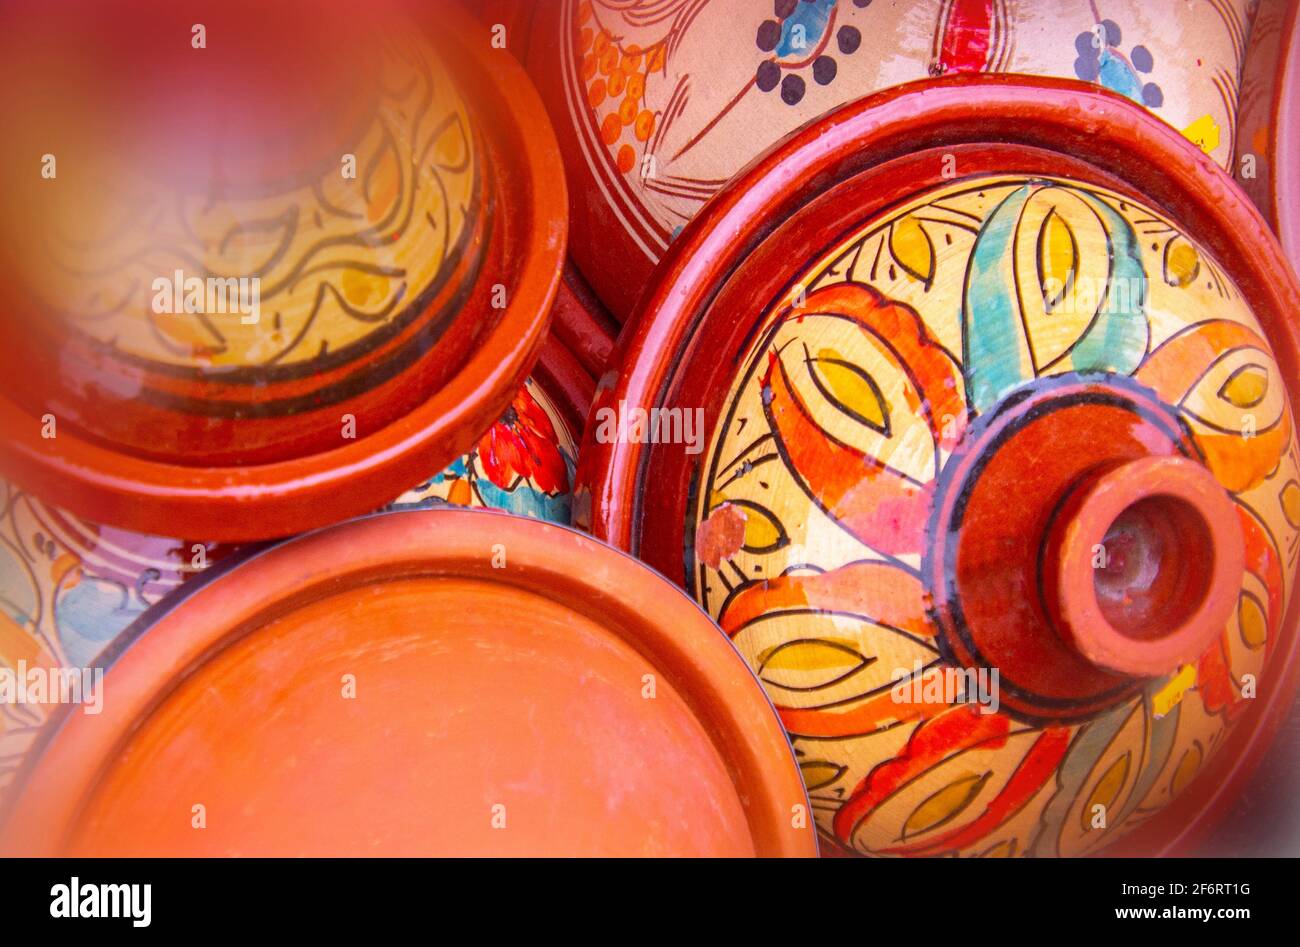 Morocco, Handicraft, typical ceramic tagine plates. Stock Photo